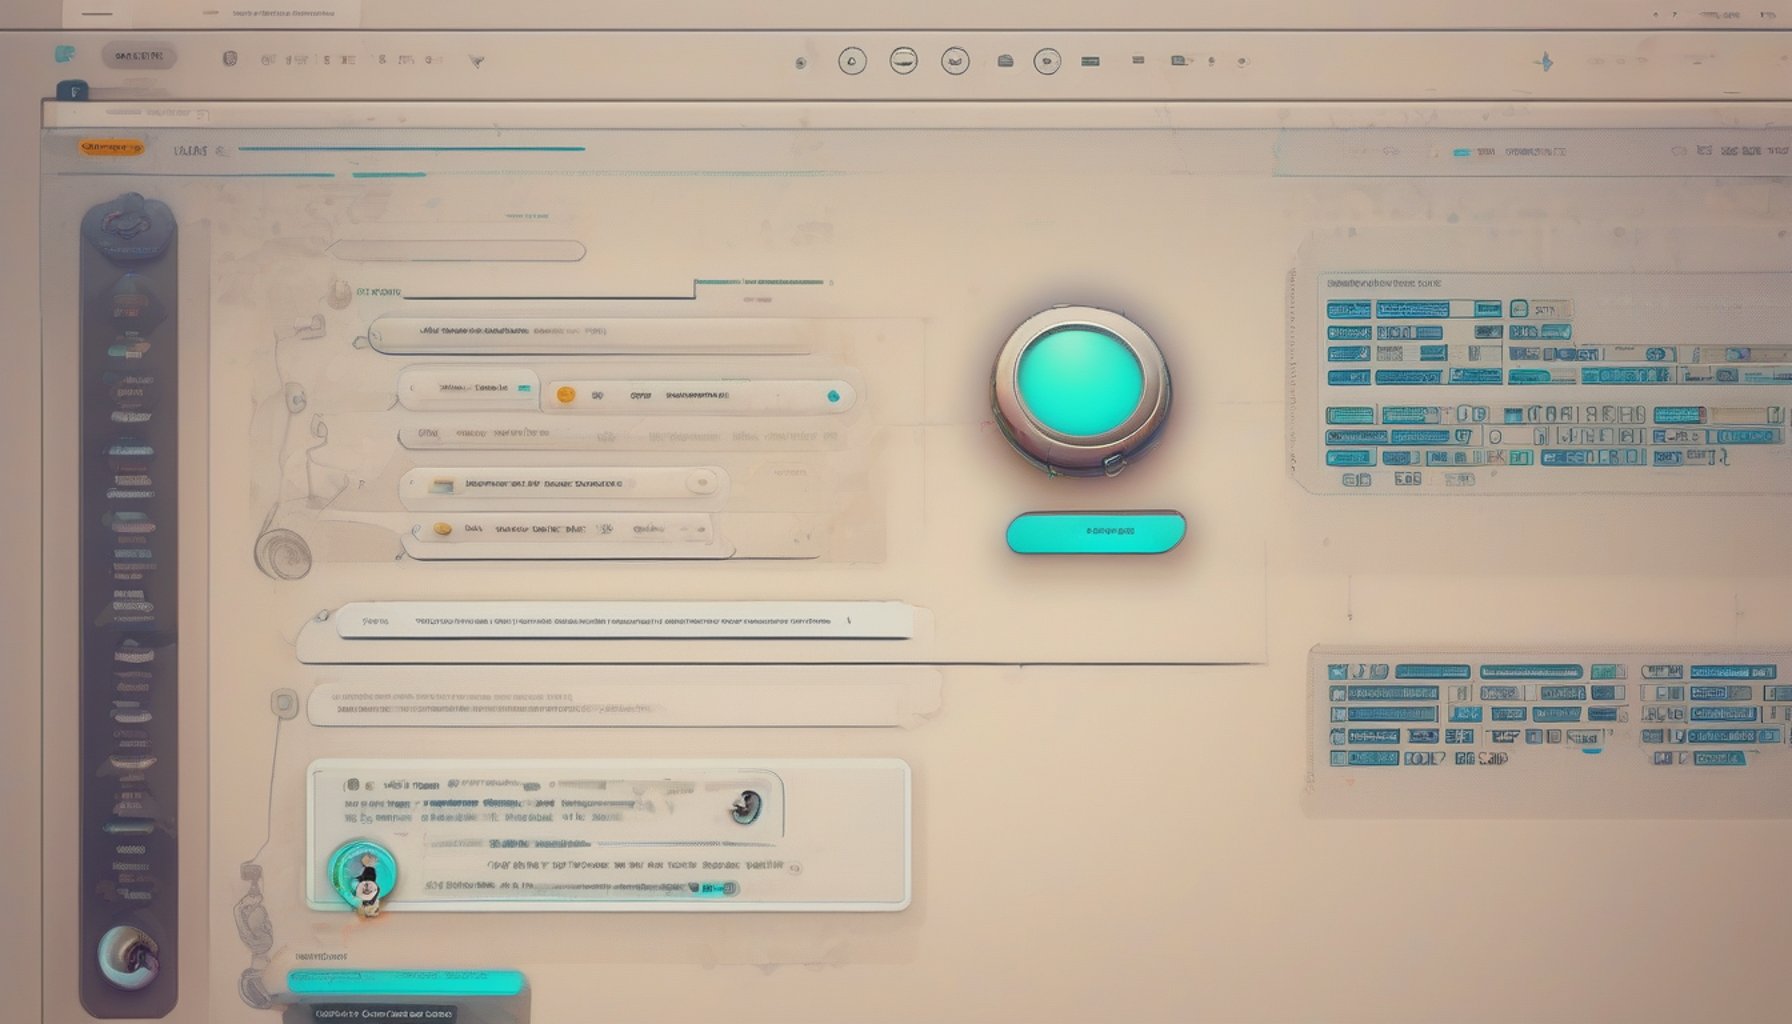 chatbot interface, computer screen, dim lighting